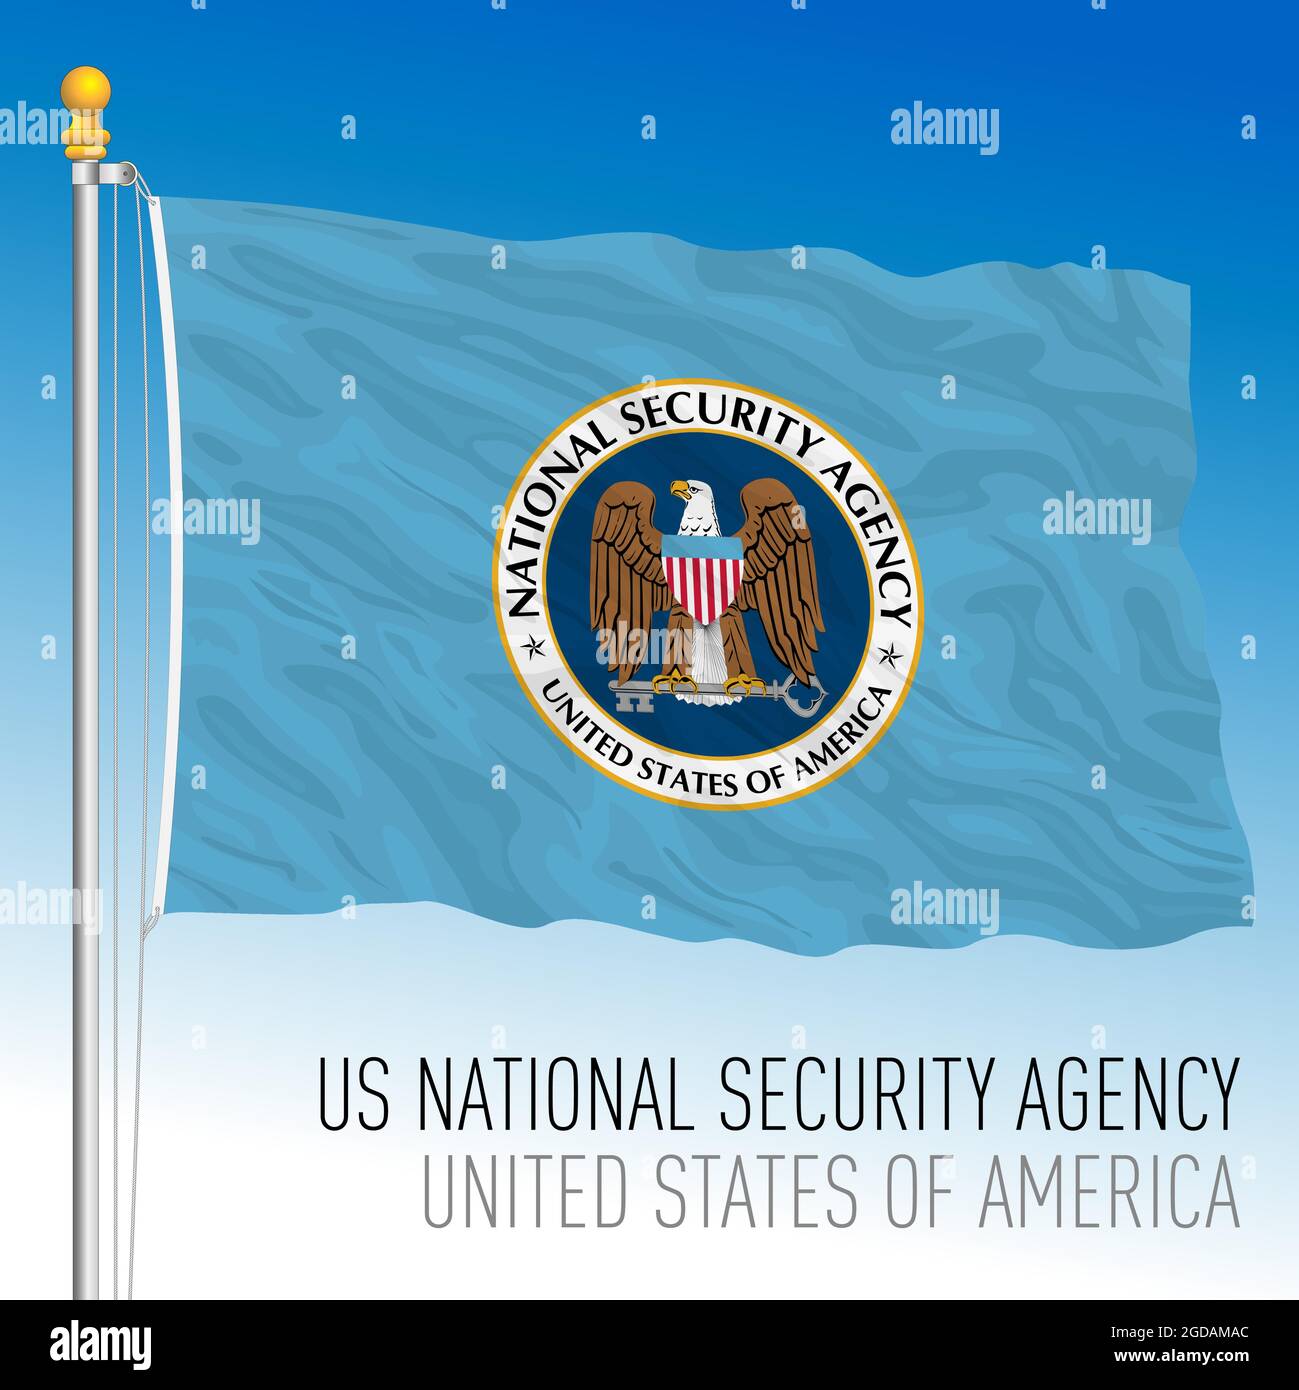 NSA-Flagge DER US National Security Agency, Vereinigte Staaten von Amerika, Vektorgrafik Stock Vektor